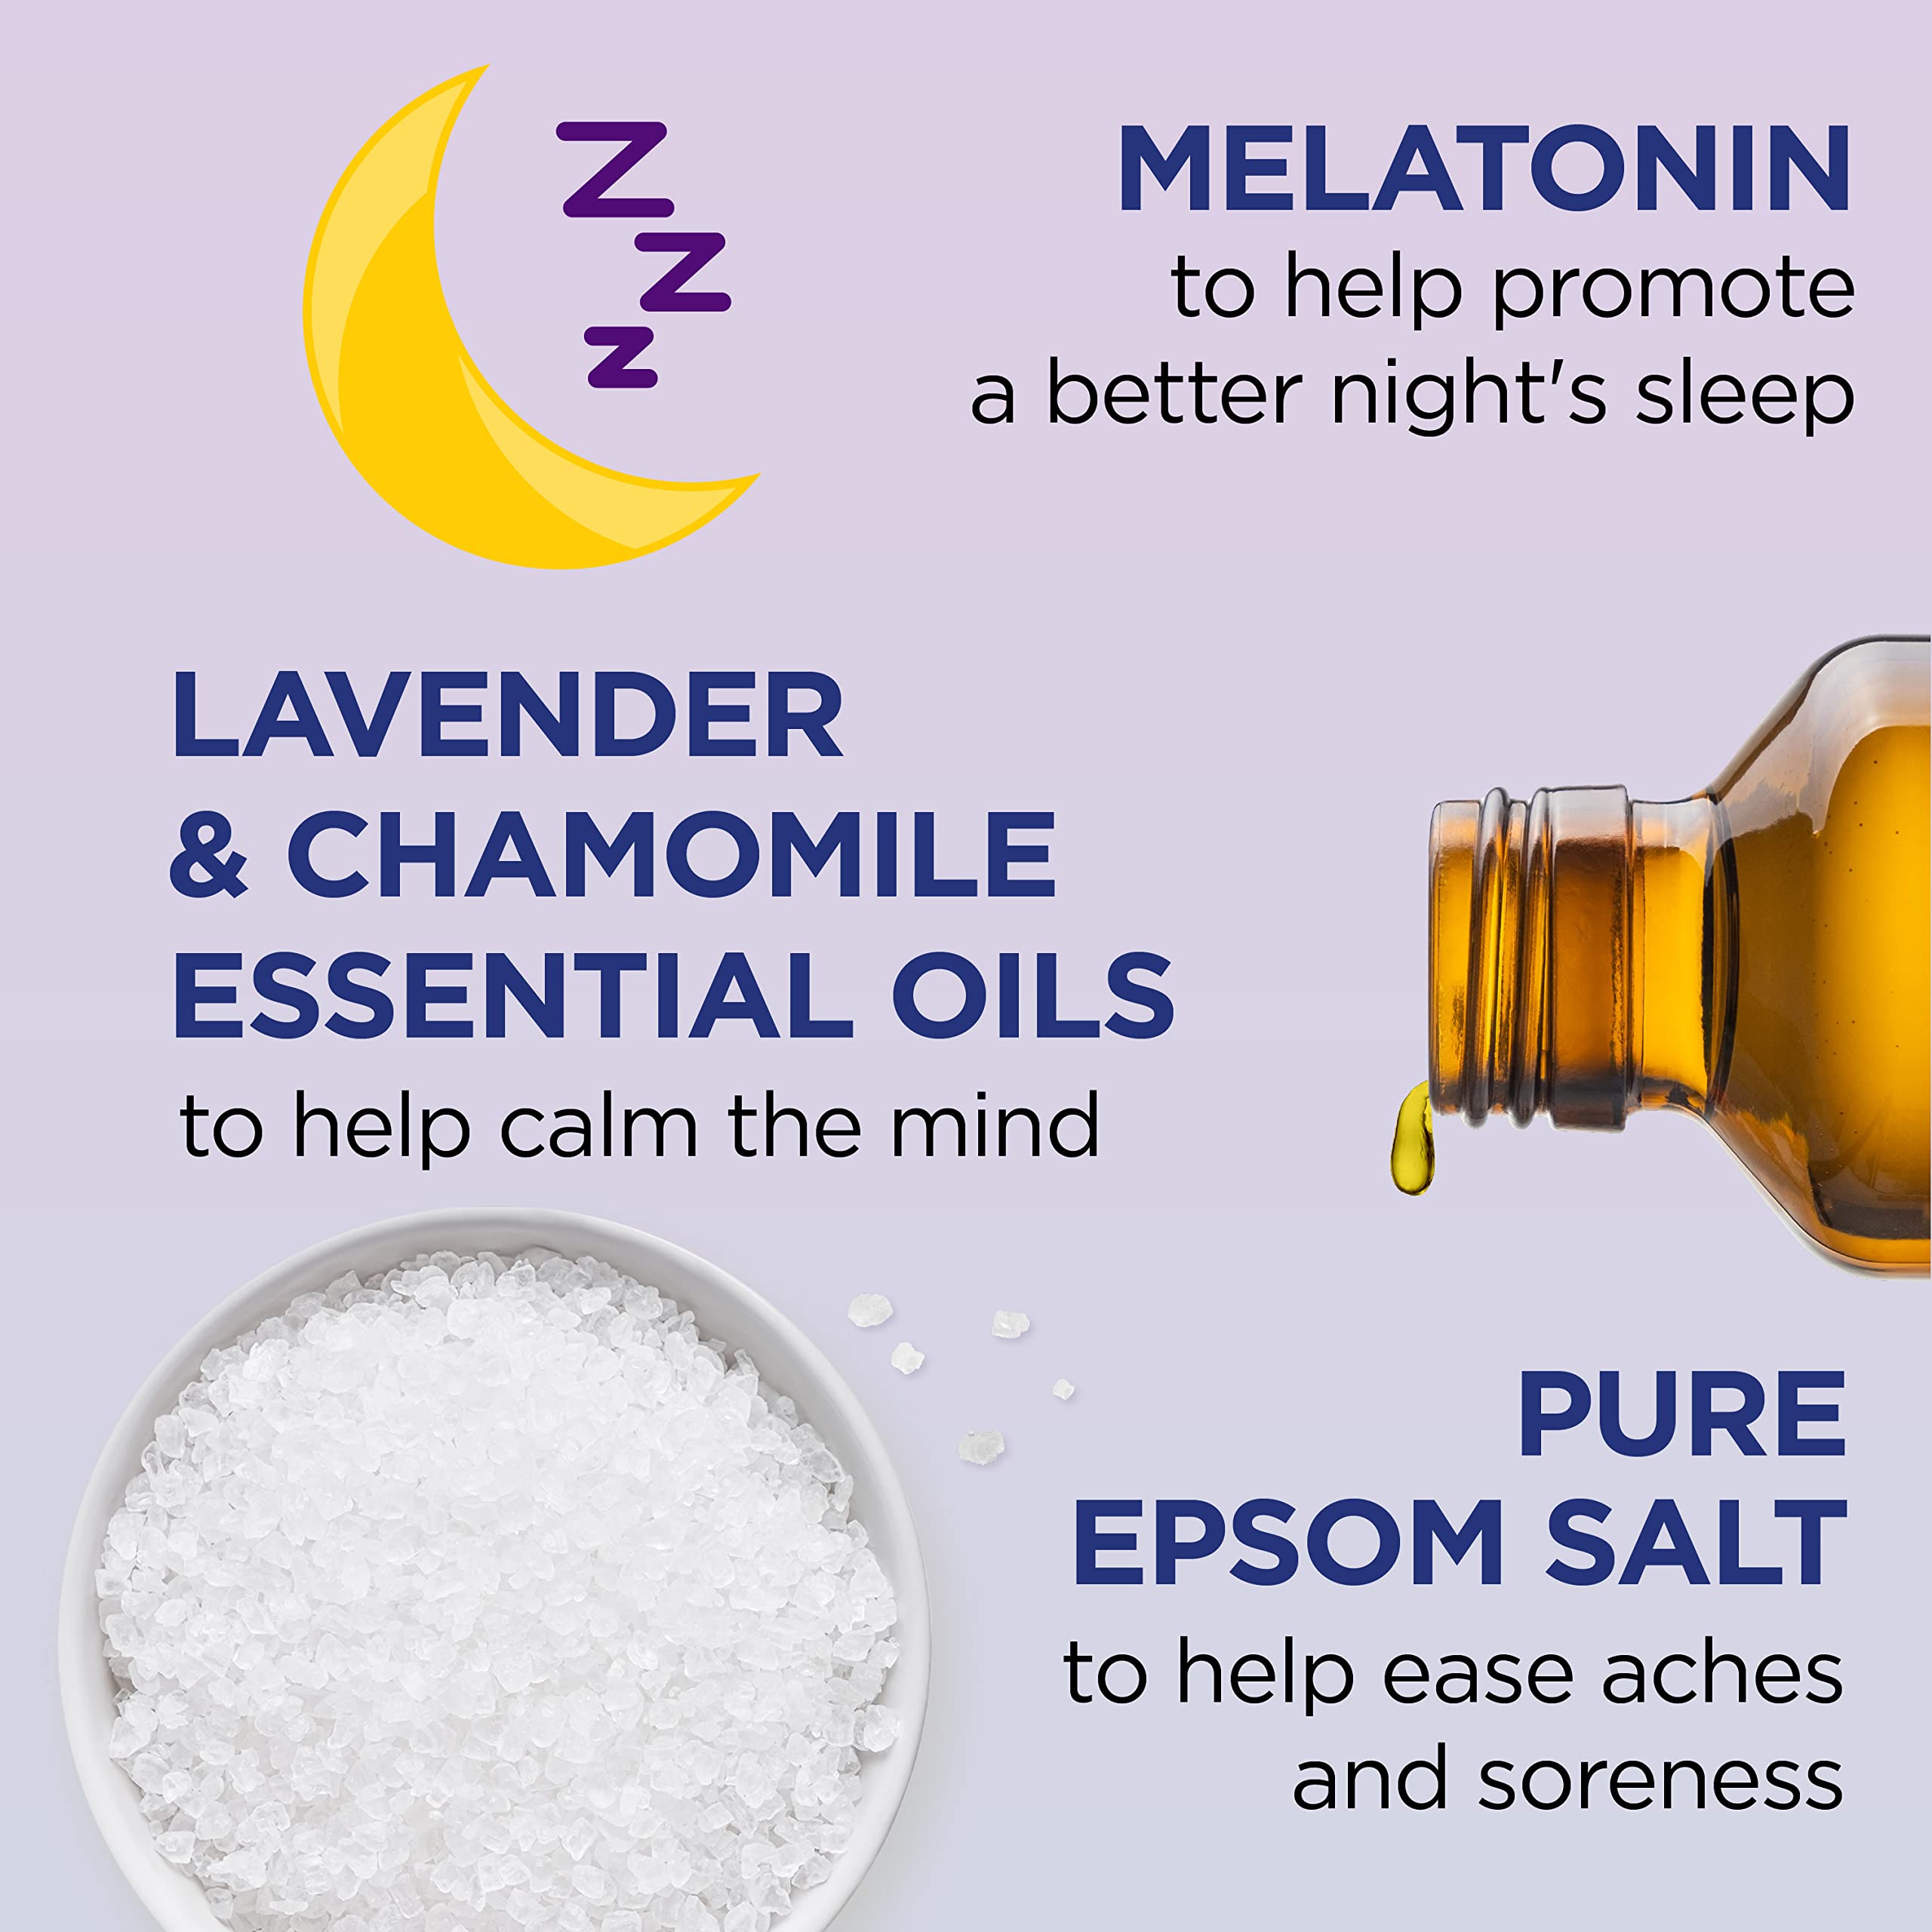 Dr Teal's Pure Epsom Salt, Melatonin Sleep Soak With Essential Oil Blend, 3 Pound (Pack of 4) (Packaging May Vary)